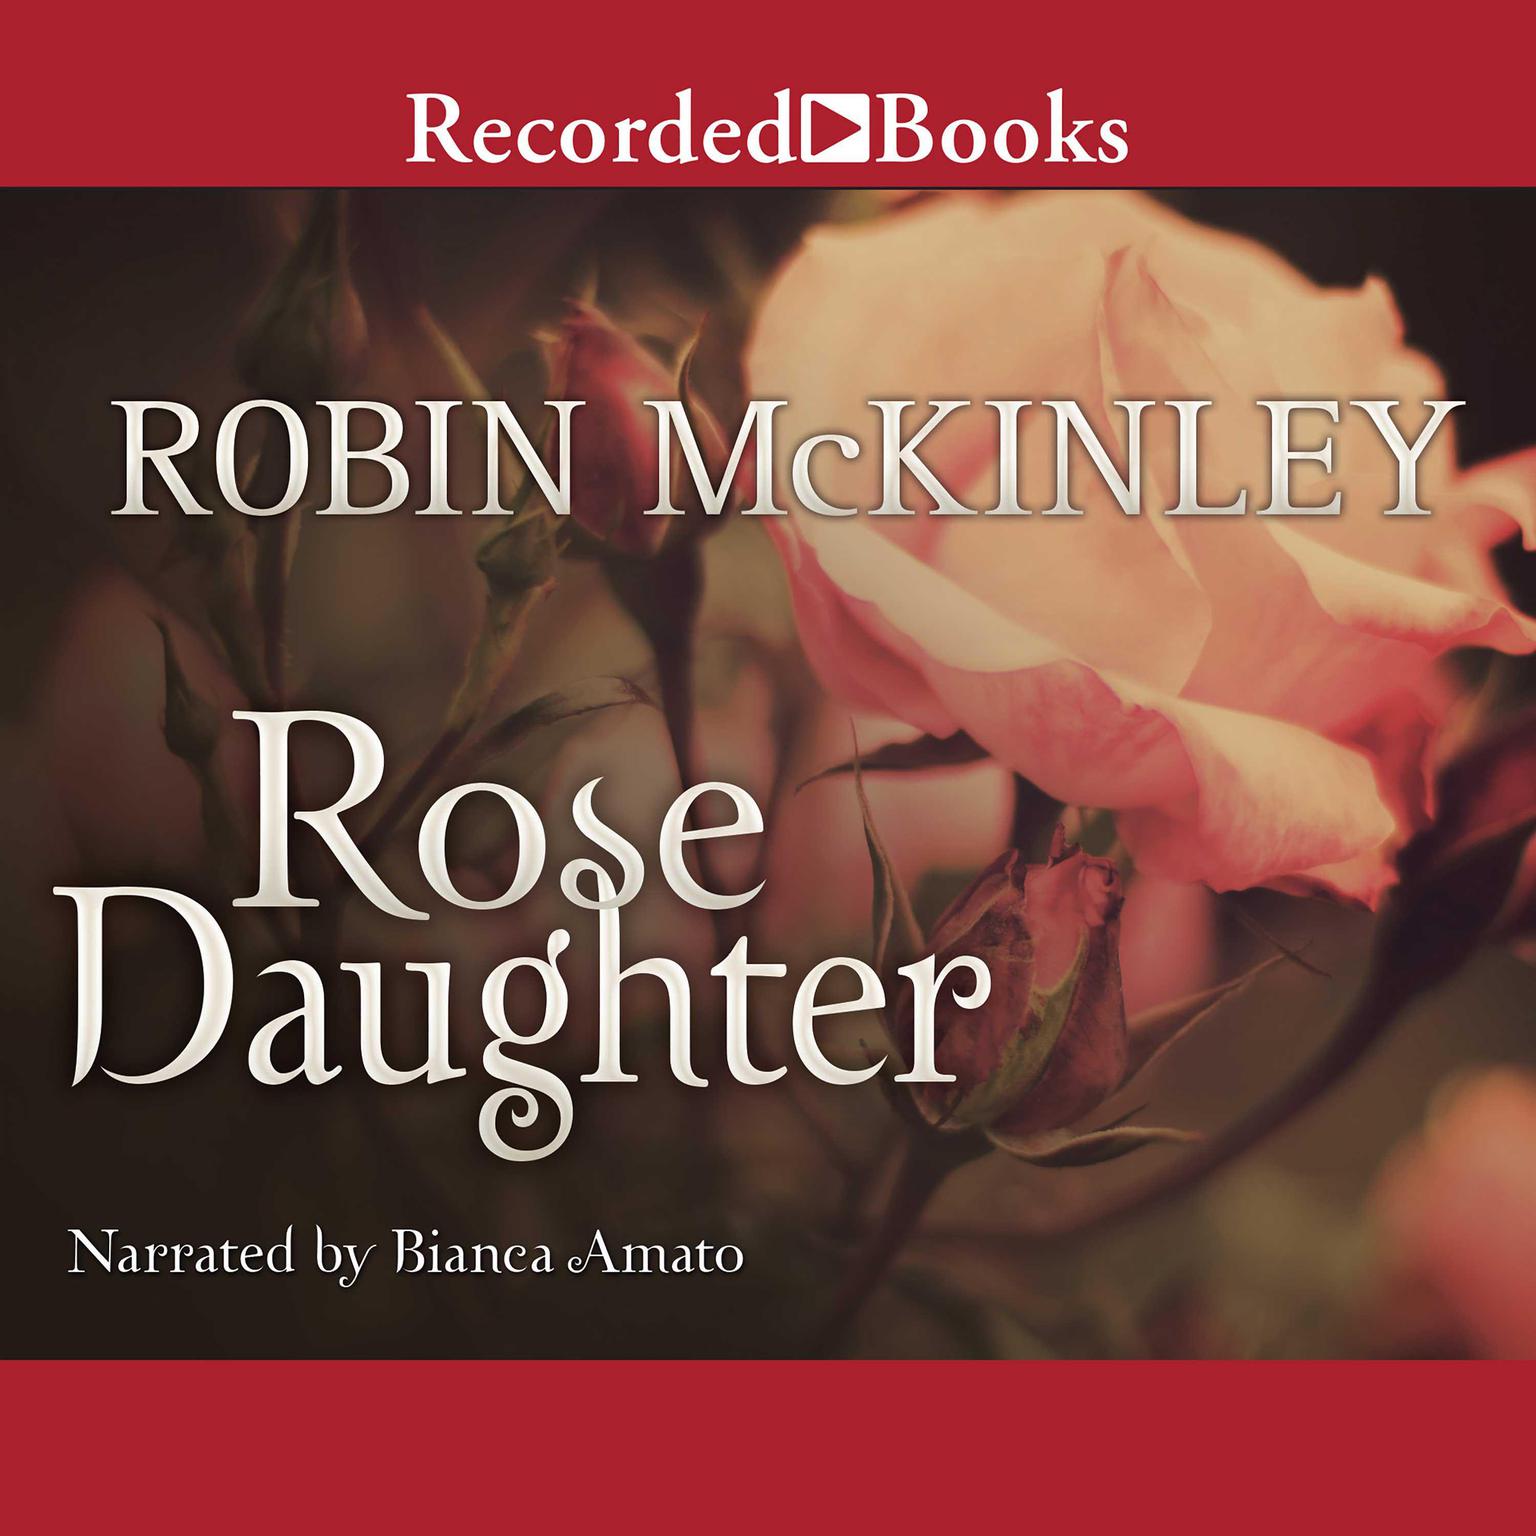 Bianca Amato, Robin McKinley: Rose Daughter (AudiobookFormat, 2013, Recorded Books, Inc.)